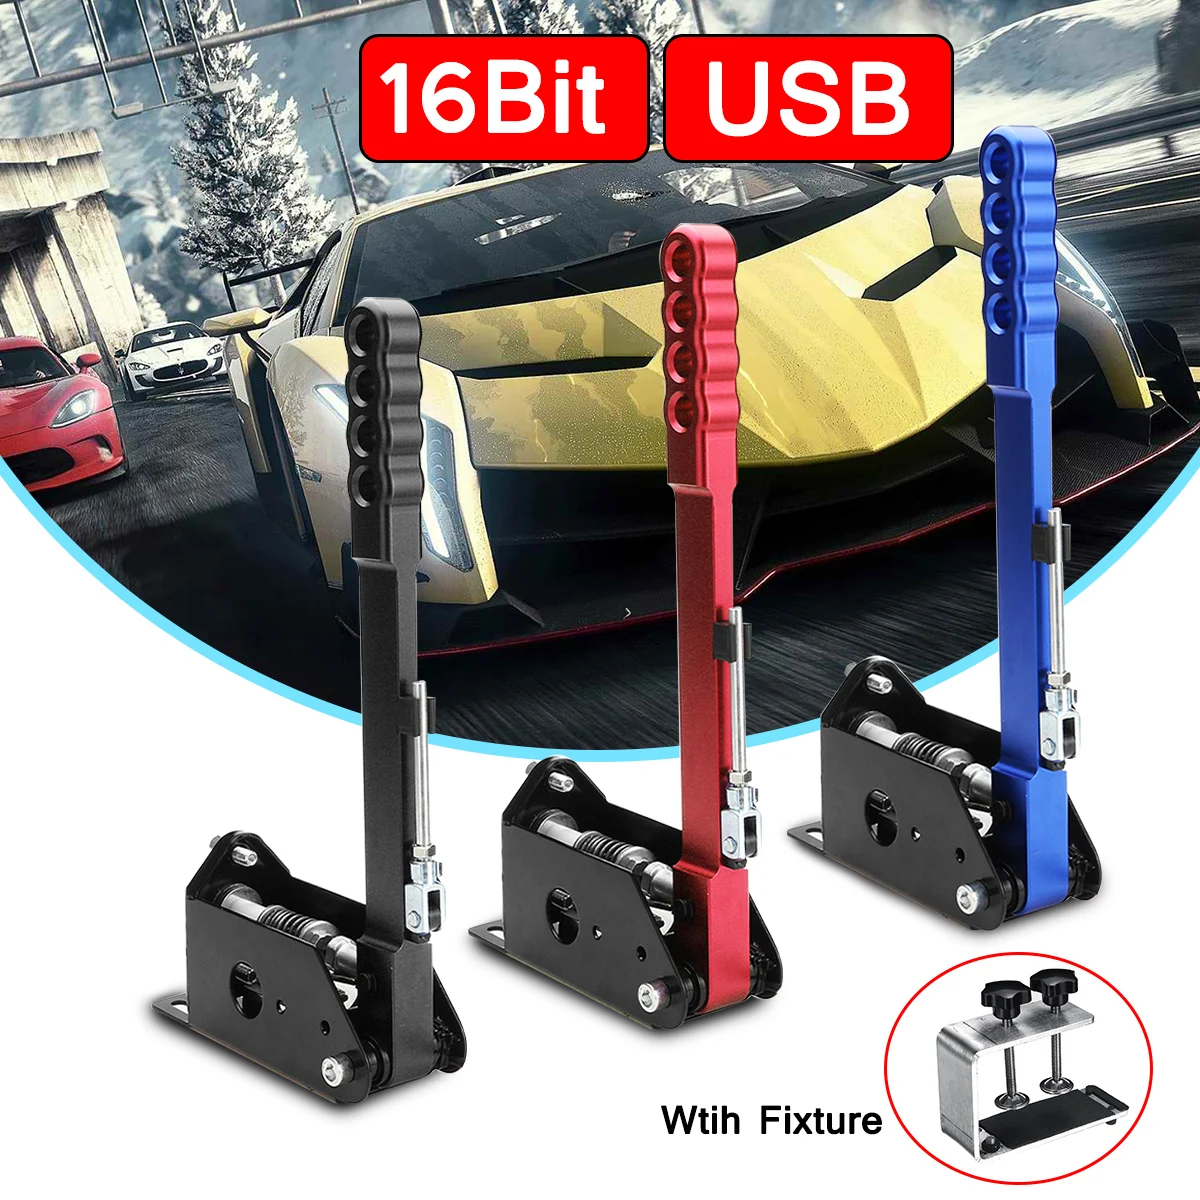 LQNB Nuevo Sistema de Freno 14 bit Hall Sensor USB Freno de Mano Sim para Juegos de Carreras G25 27/29 T300 T500 Fanatec Osw Dirt Rally Negro